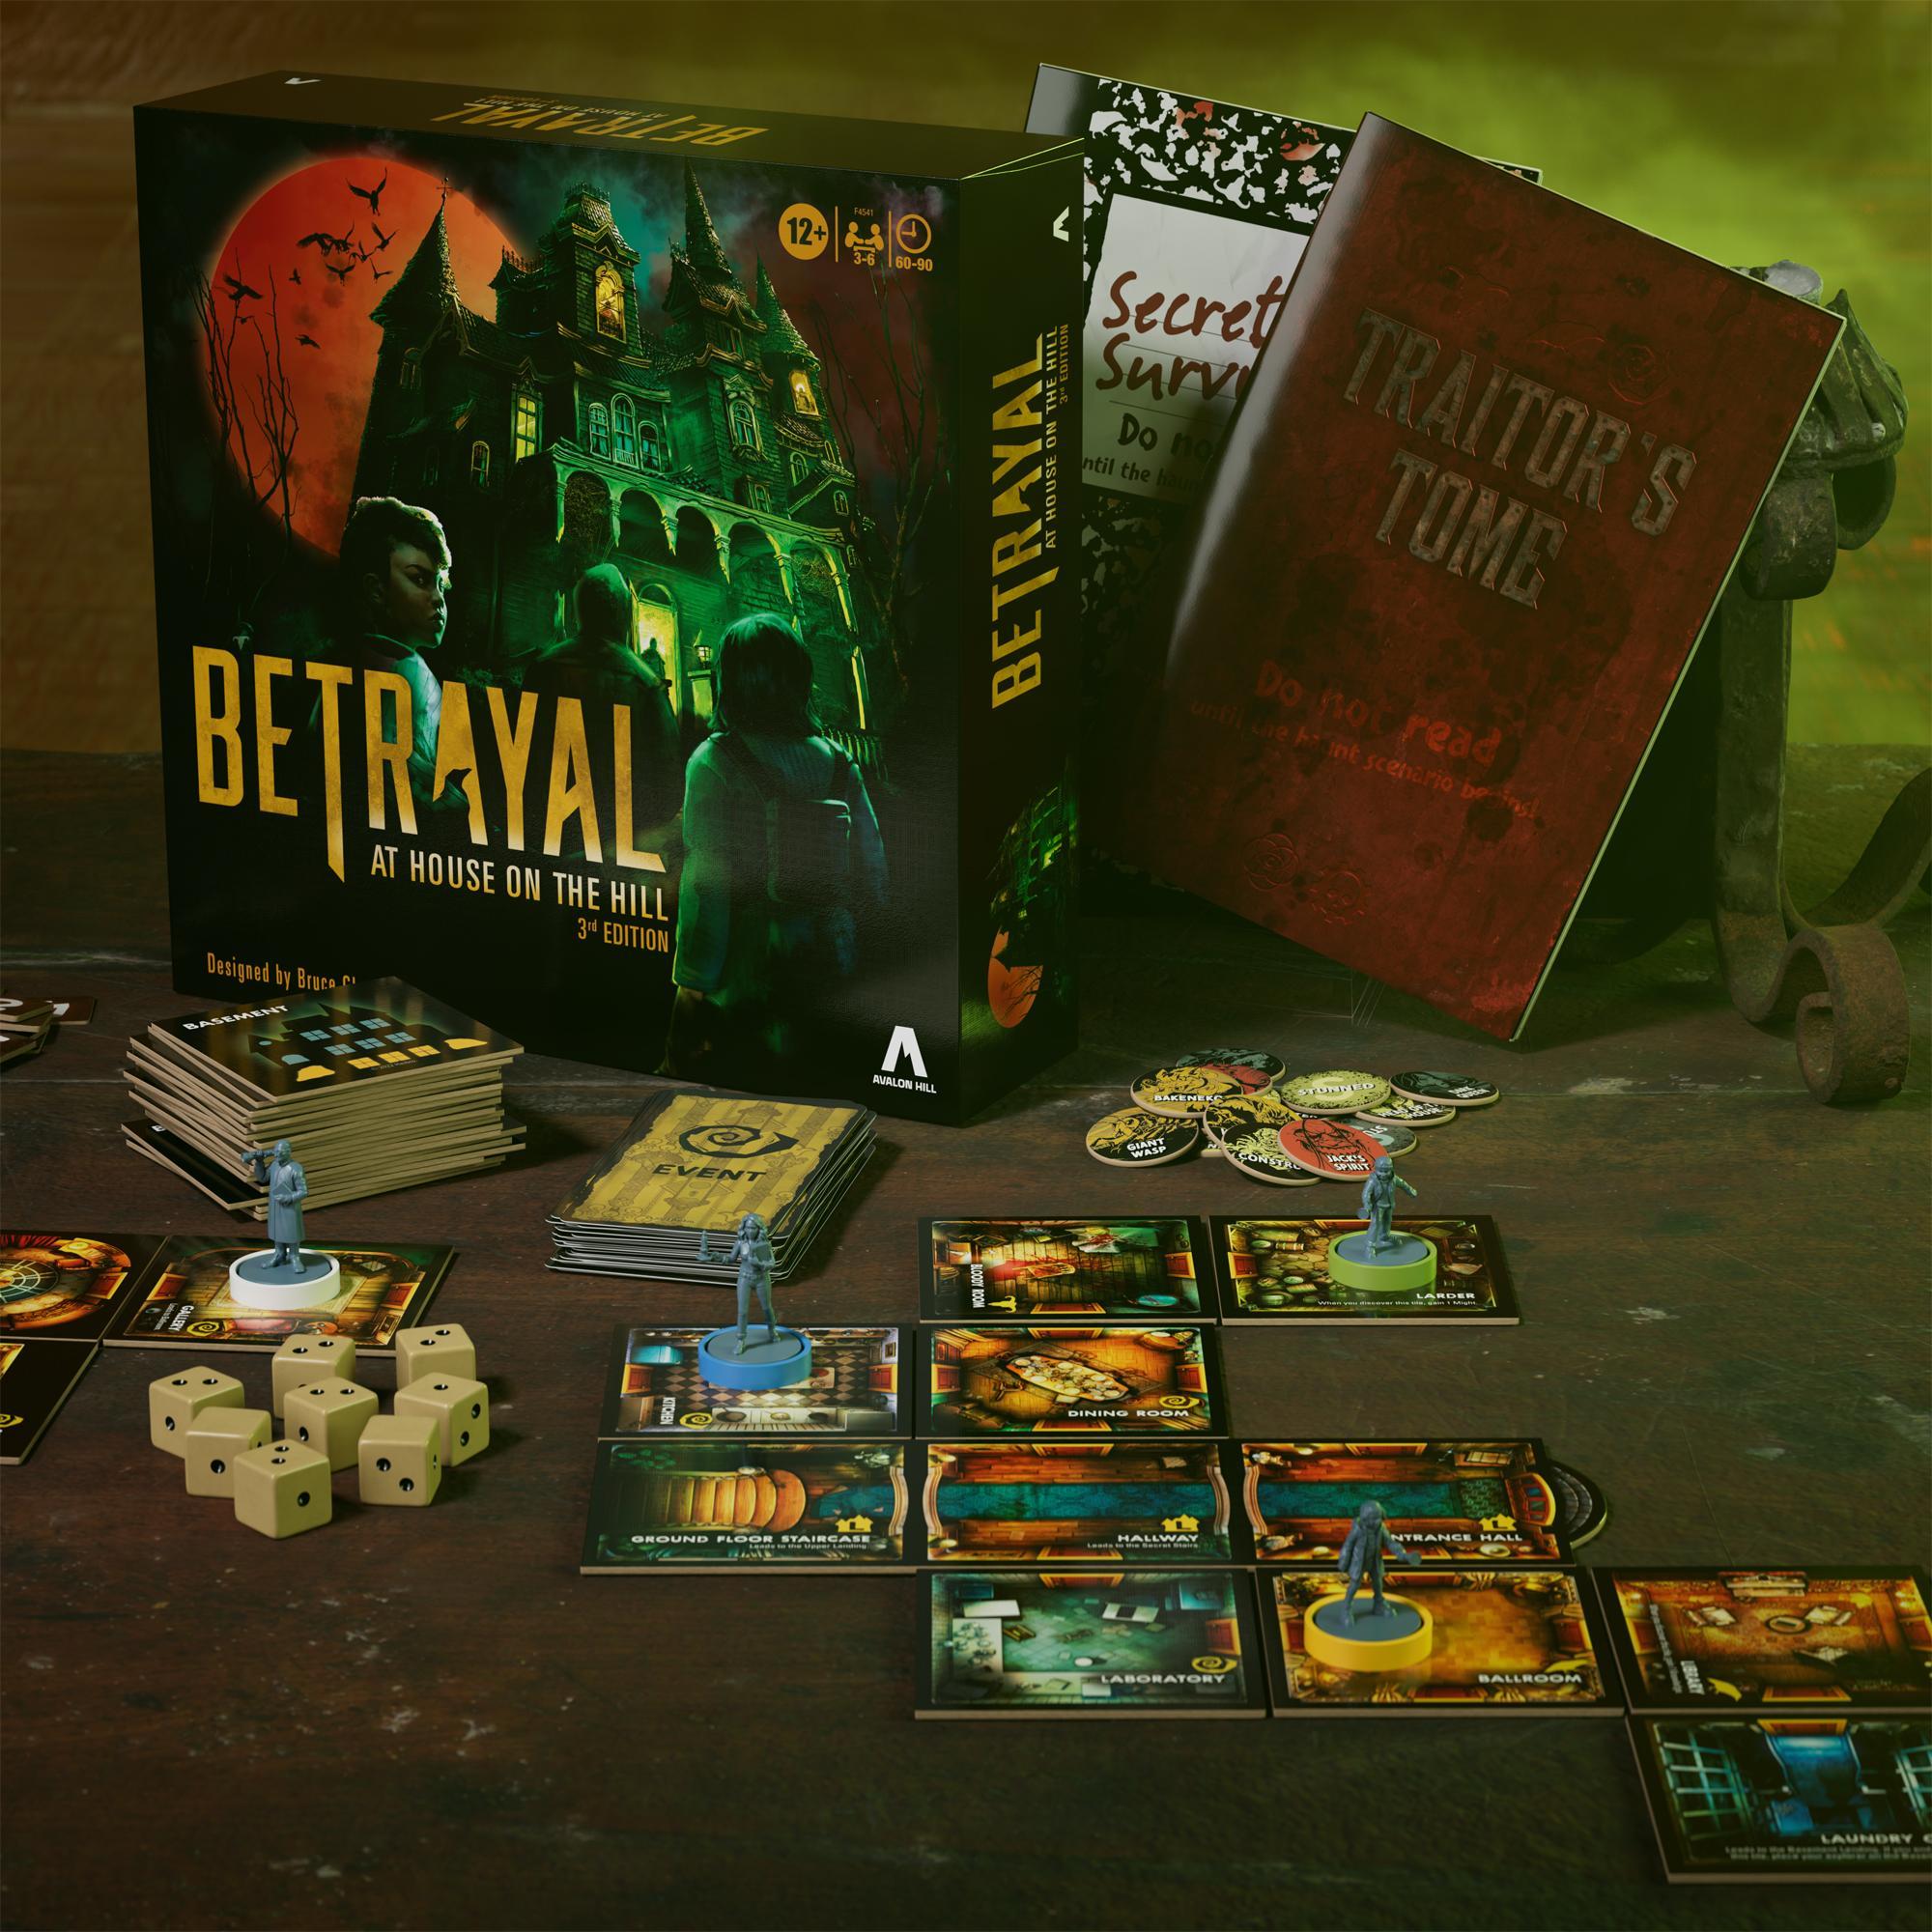 Avalon Hill - Betrayal La Casa de la Colina product thumbnail 1